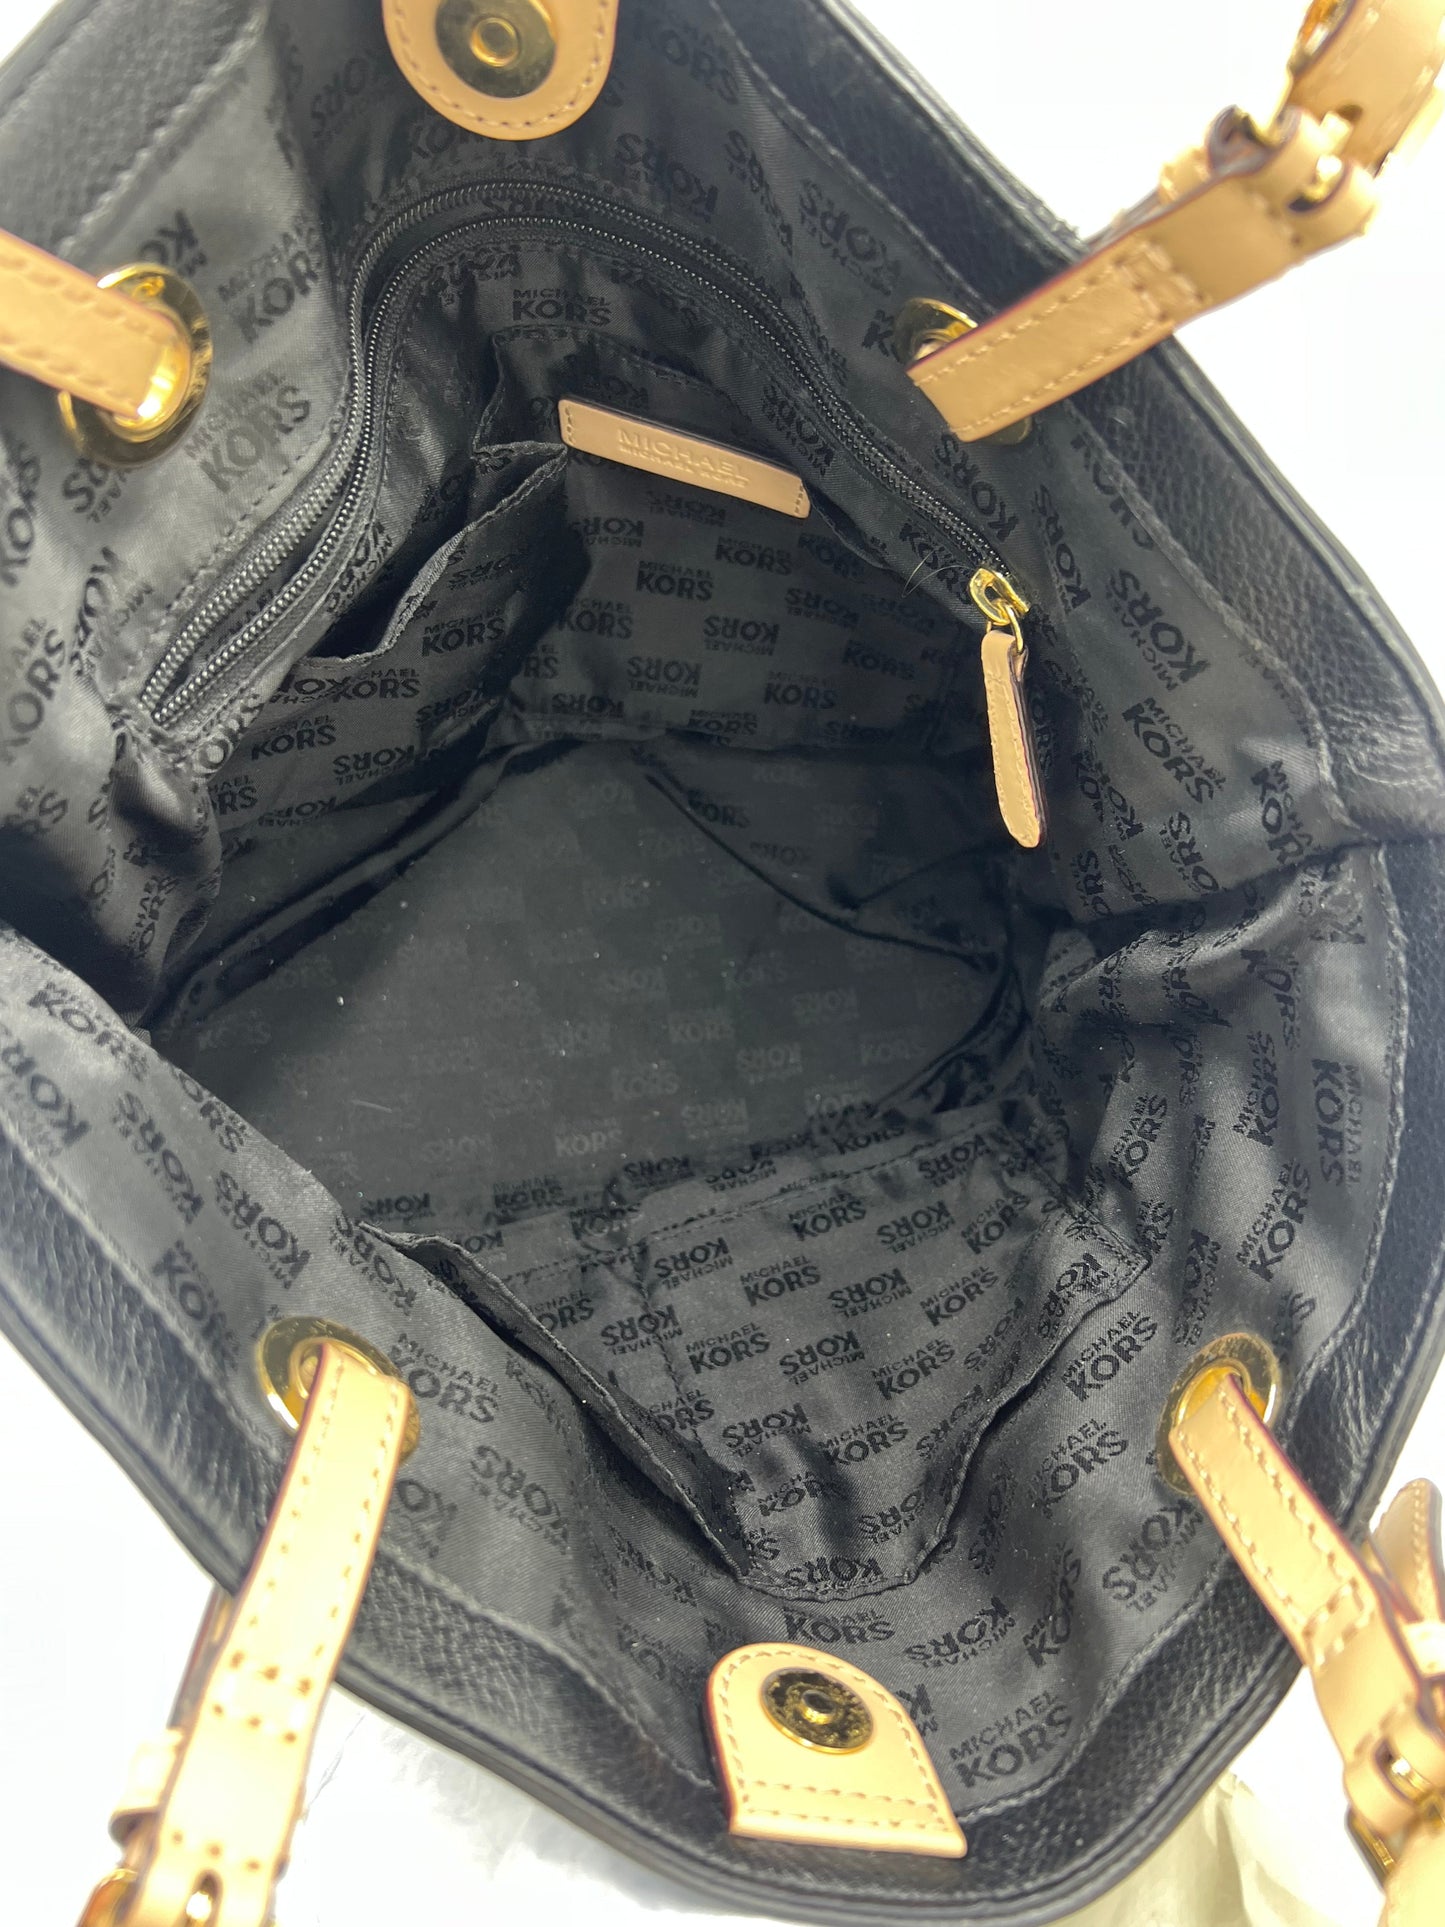 Handbag / Tote Leather Designer By Michael Kors